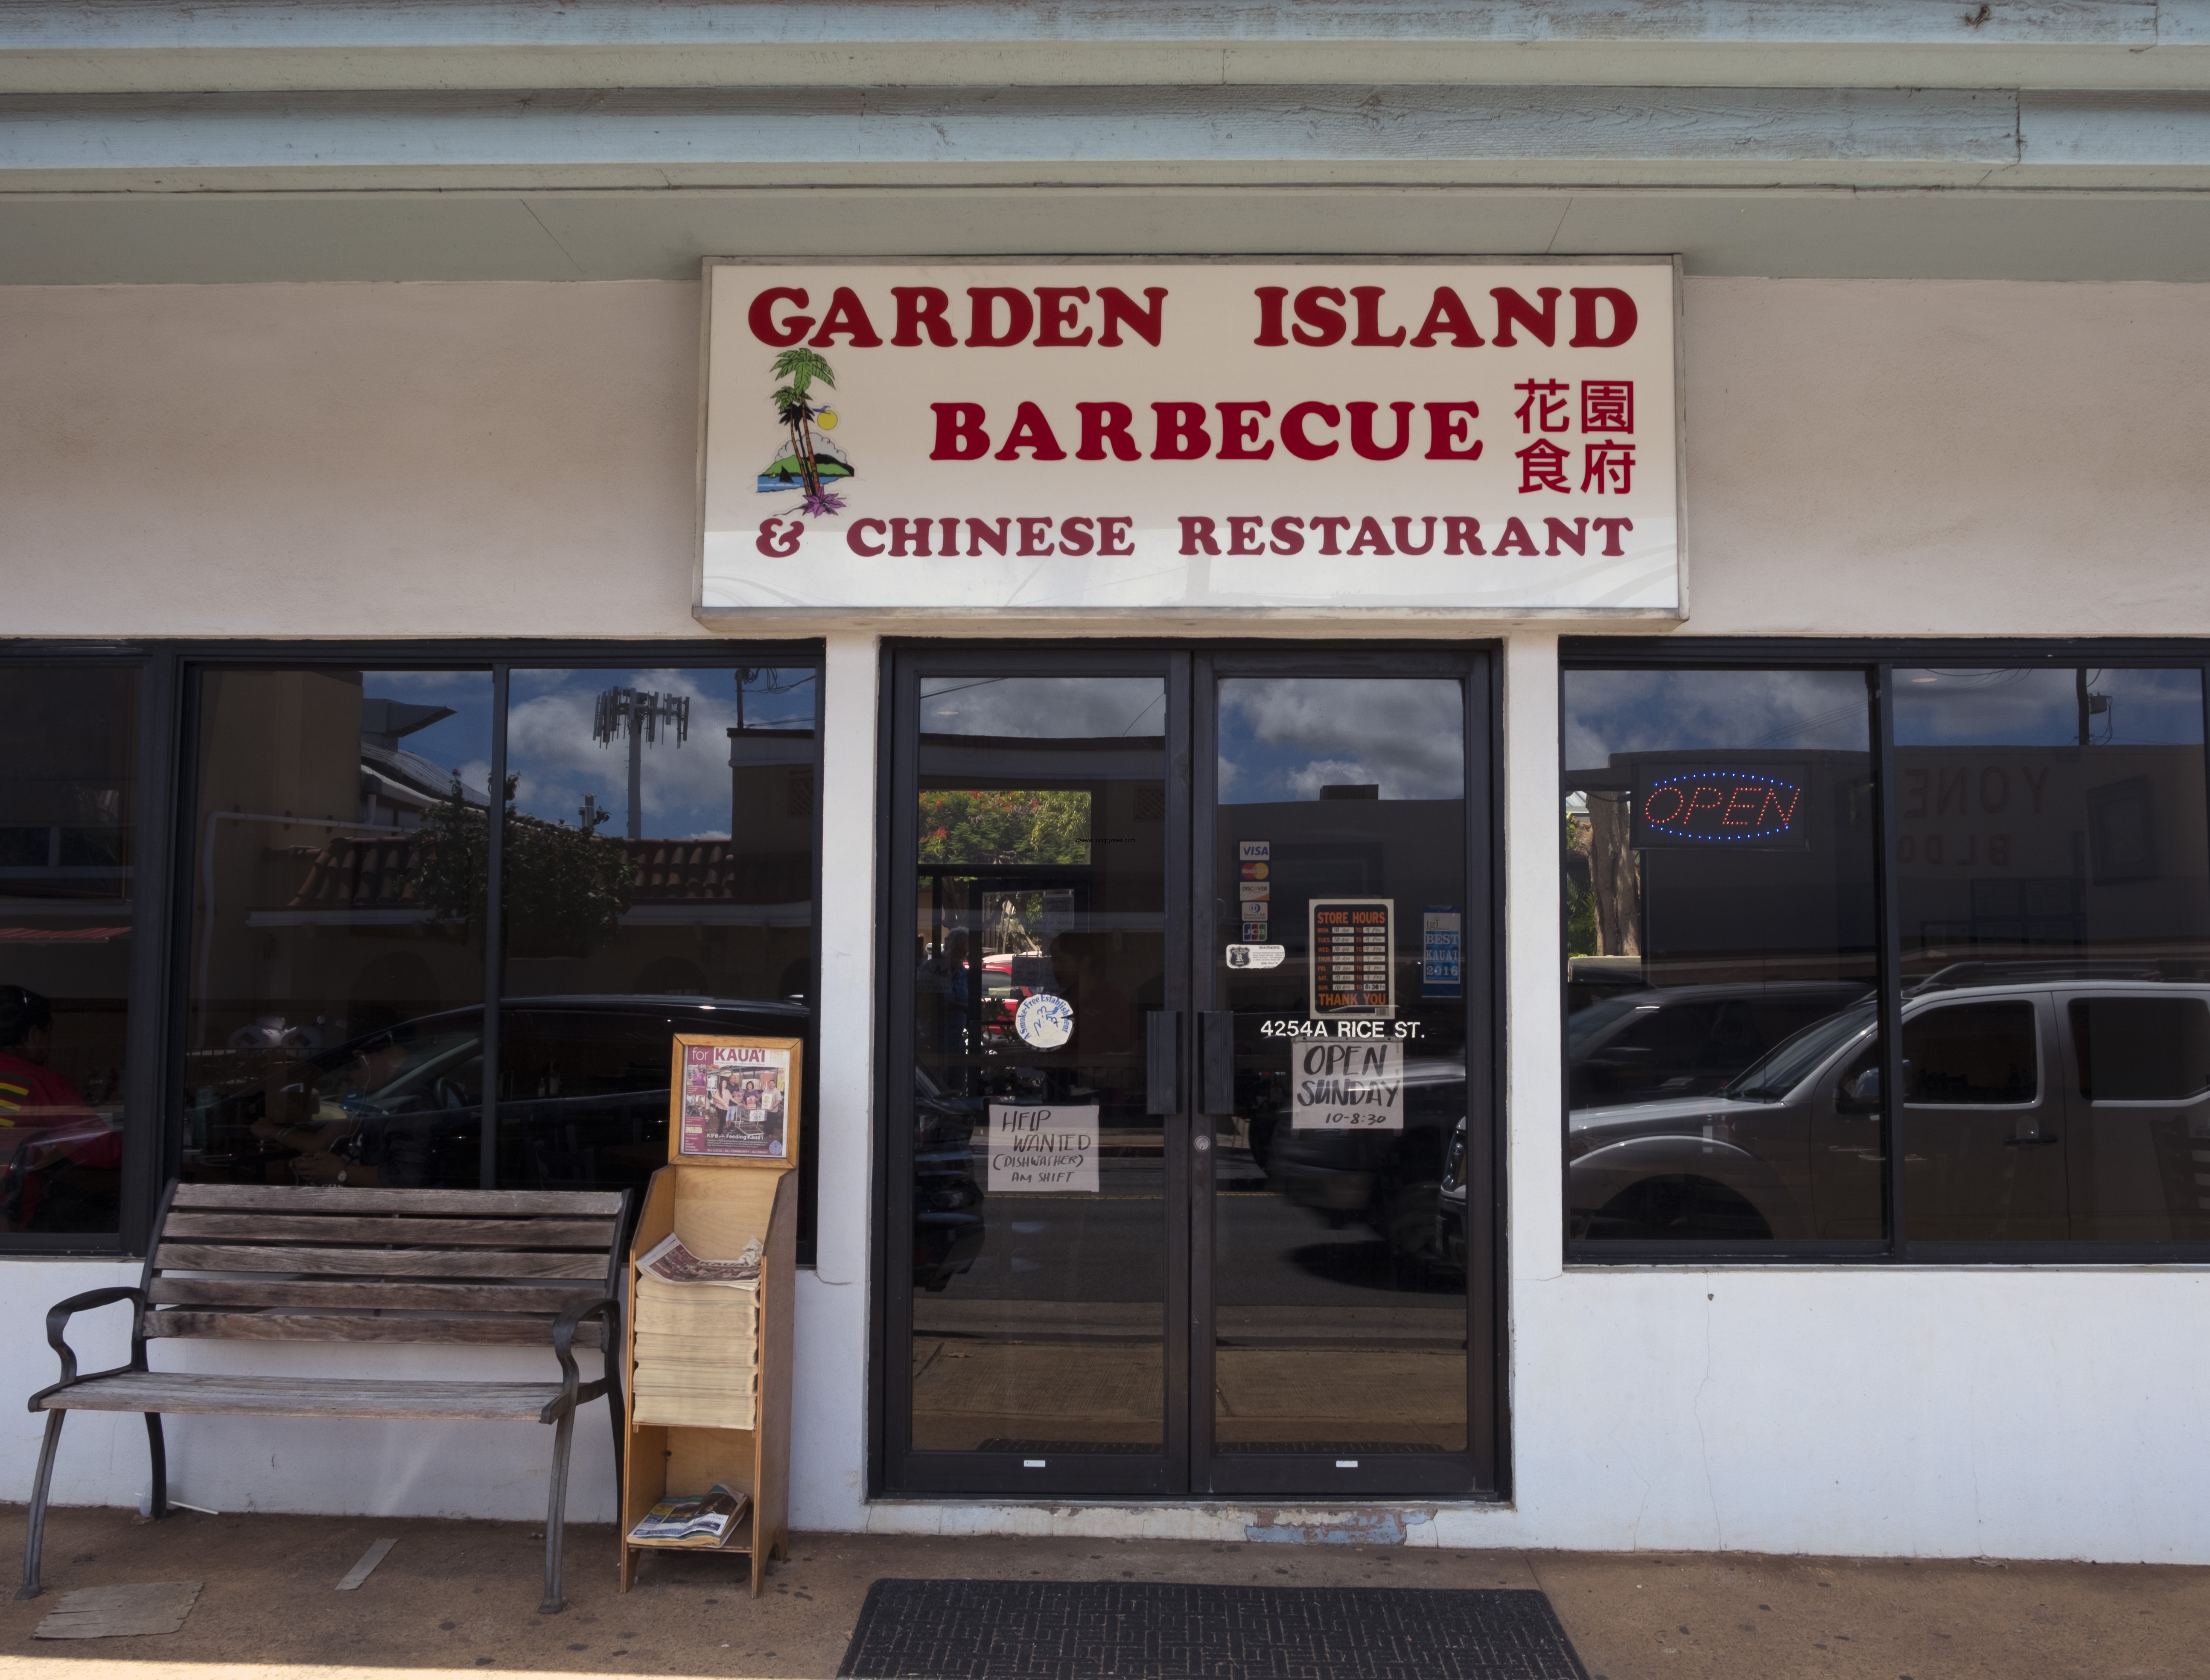 Garden Isle Barbecue Chinese Restaurant - Hungryonescom - Food Blog